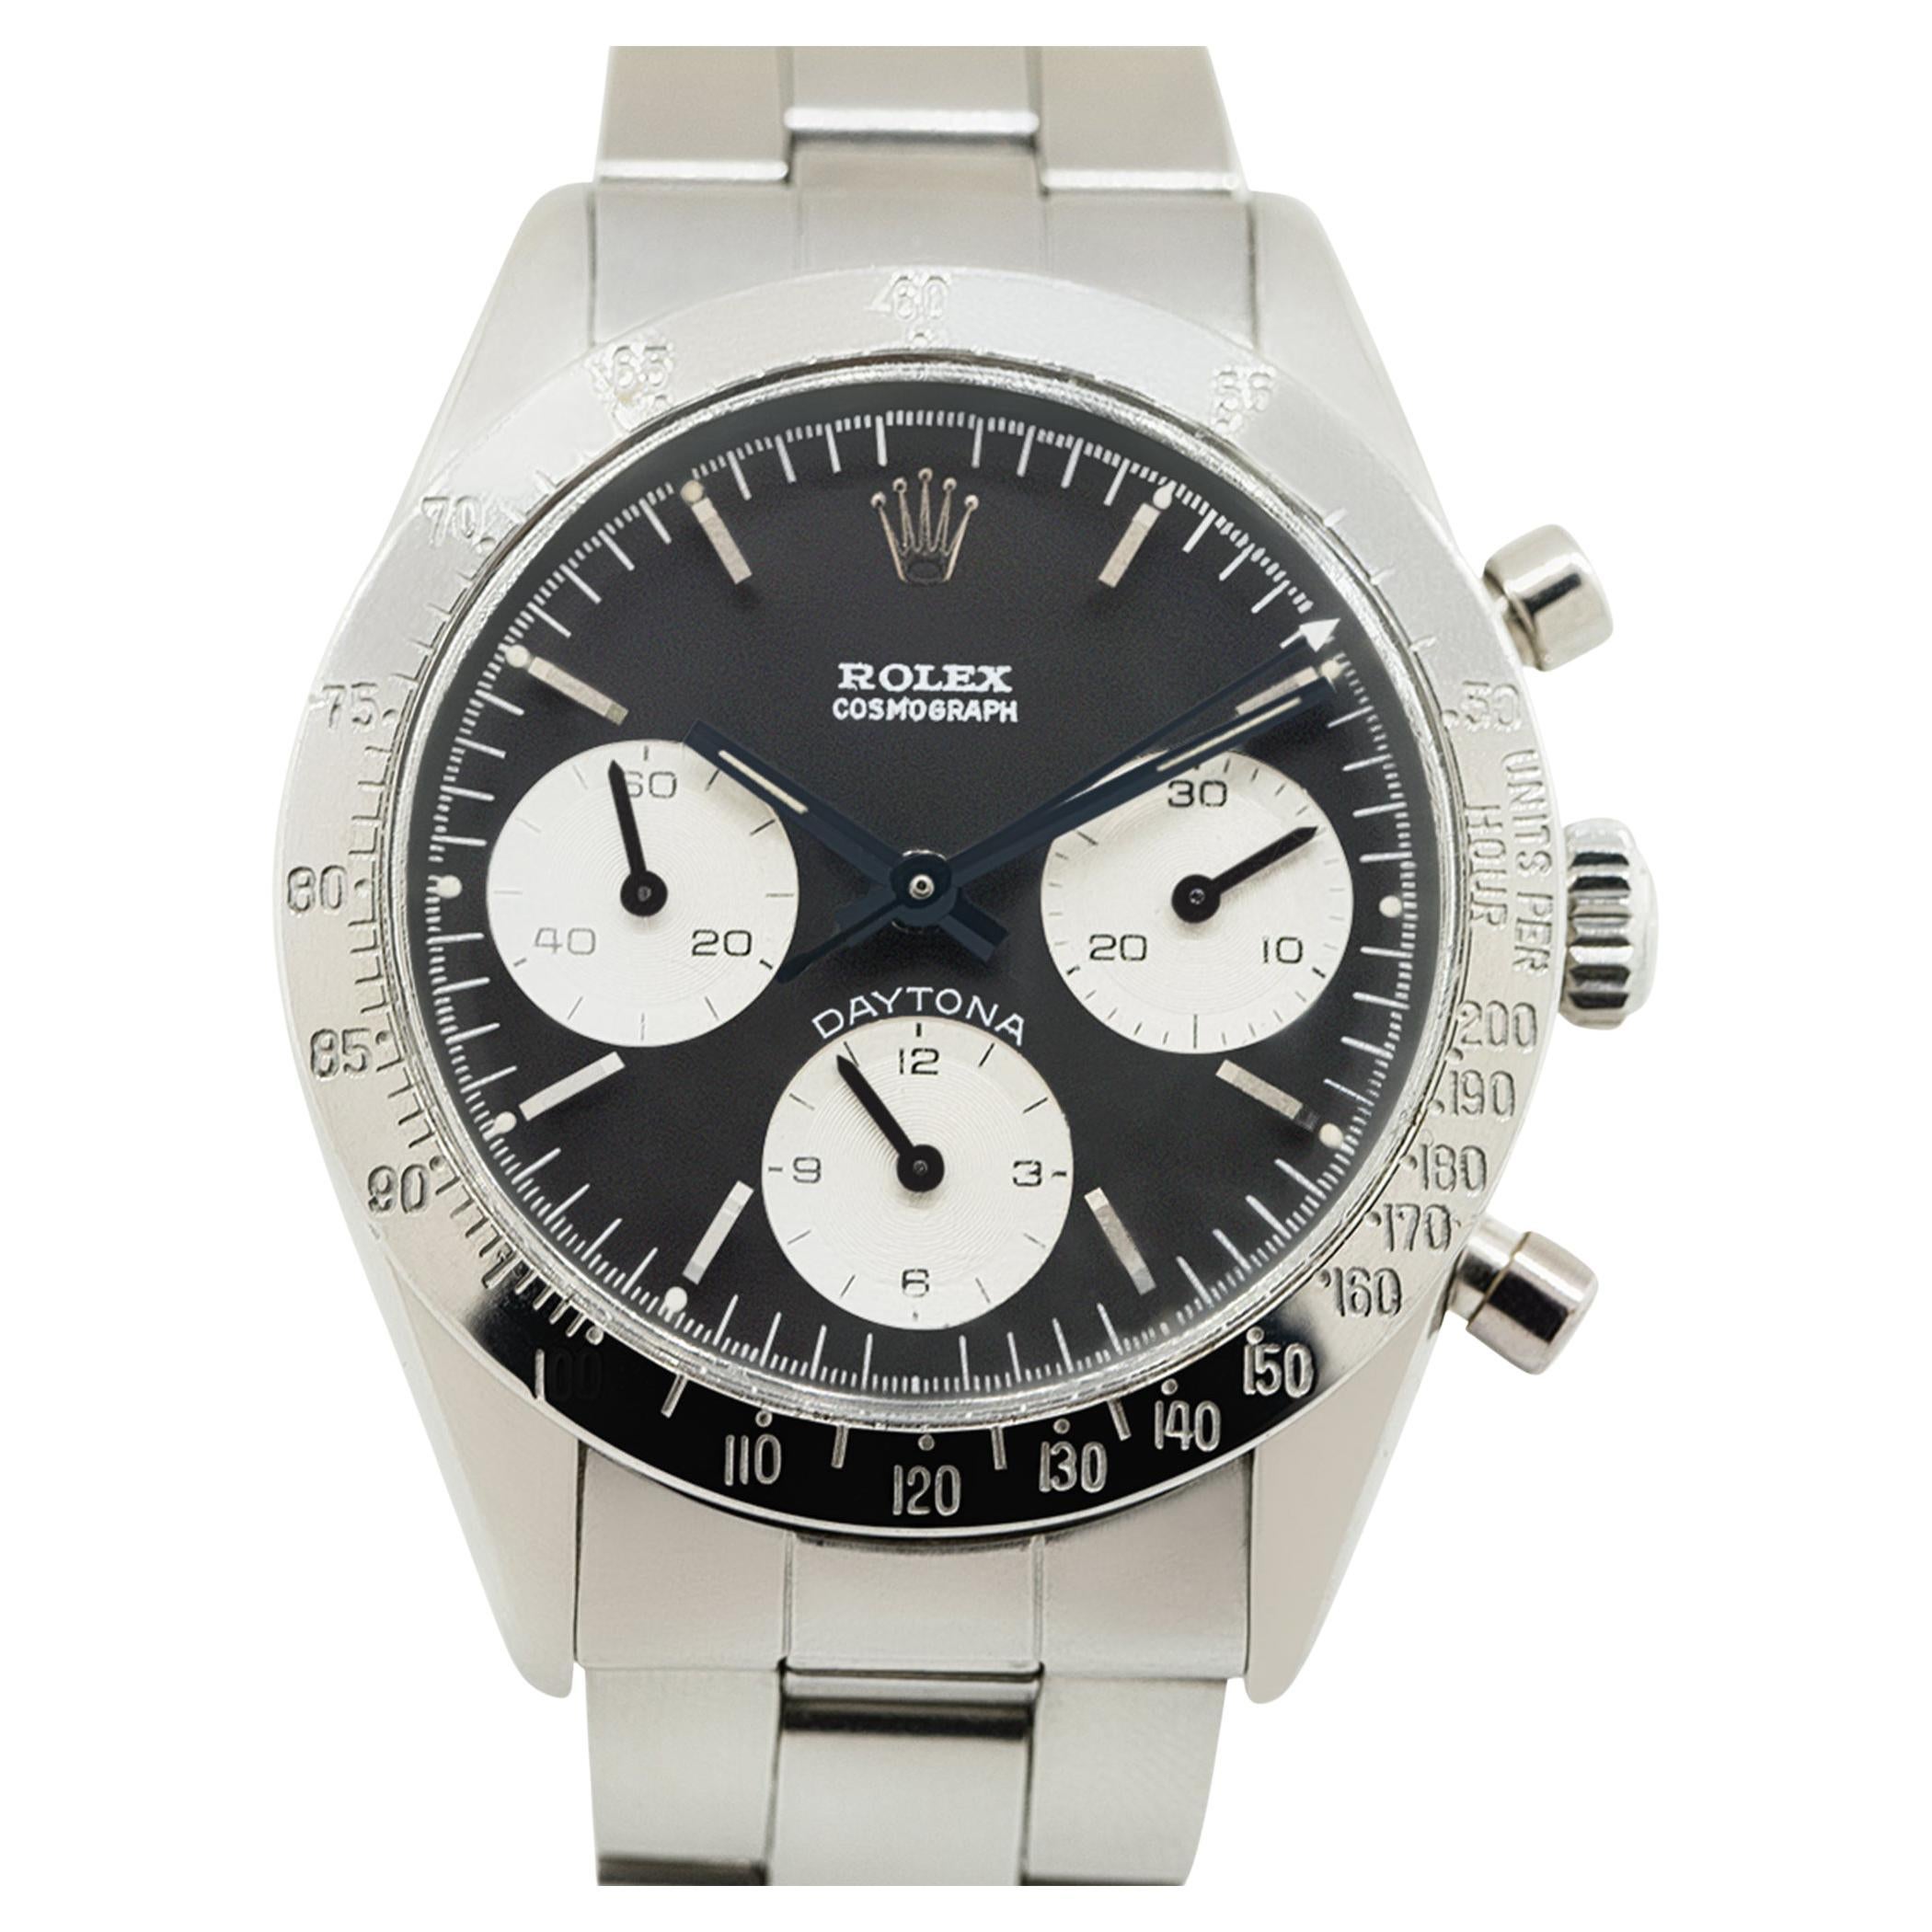 Rolex 6239 Daytona Stainless Steel Watch in Stock